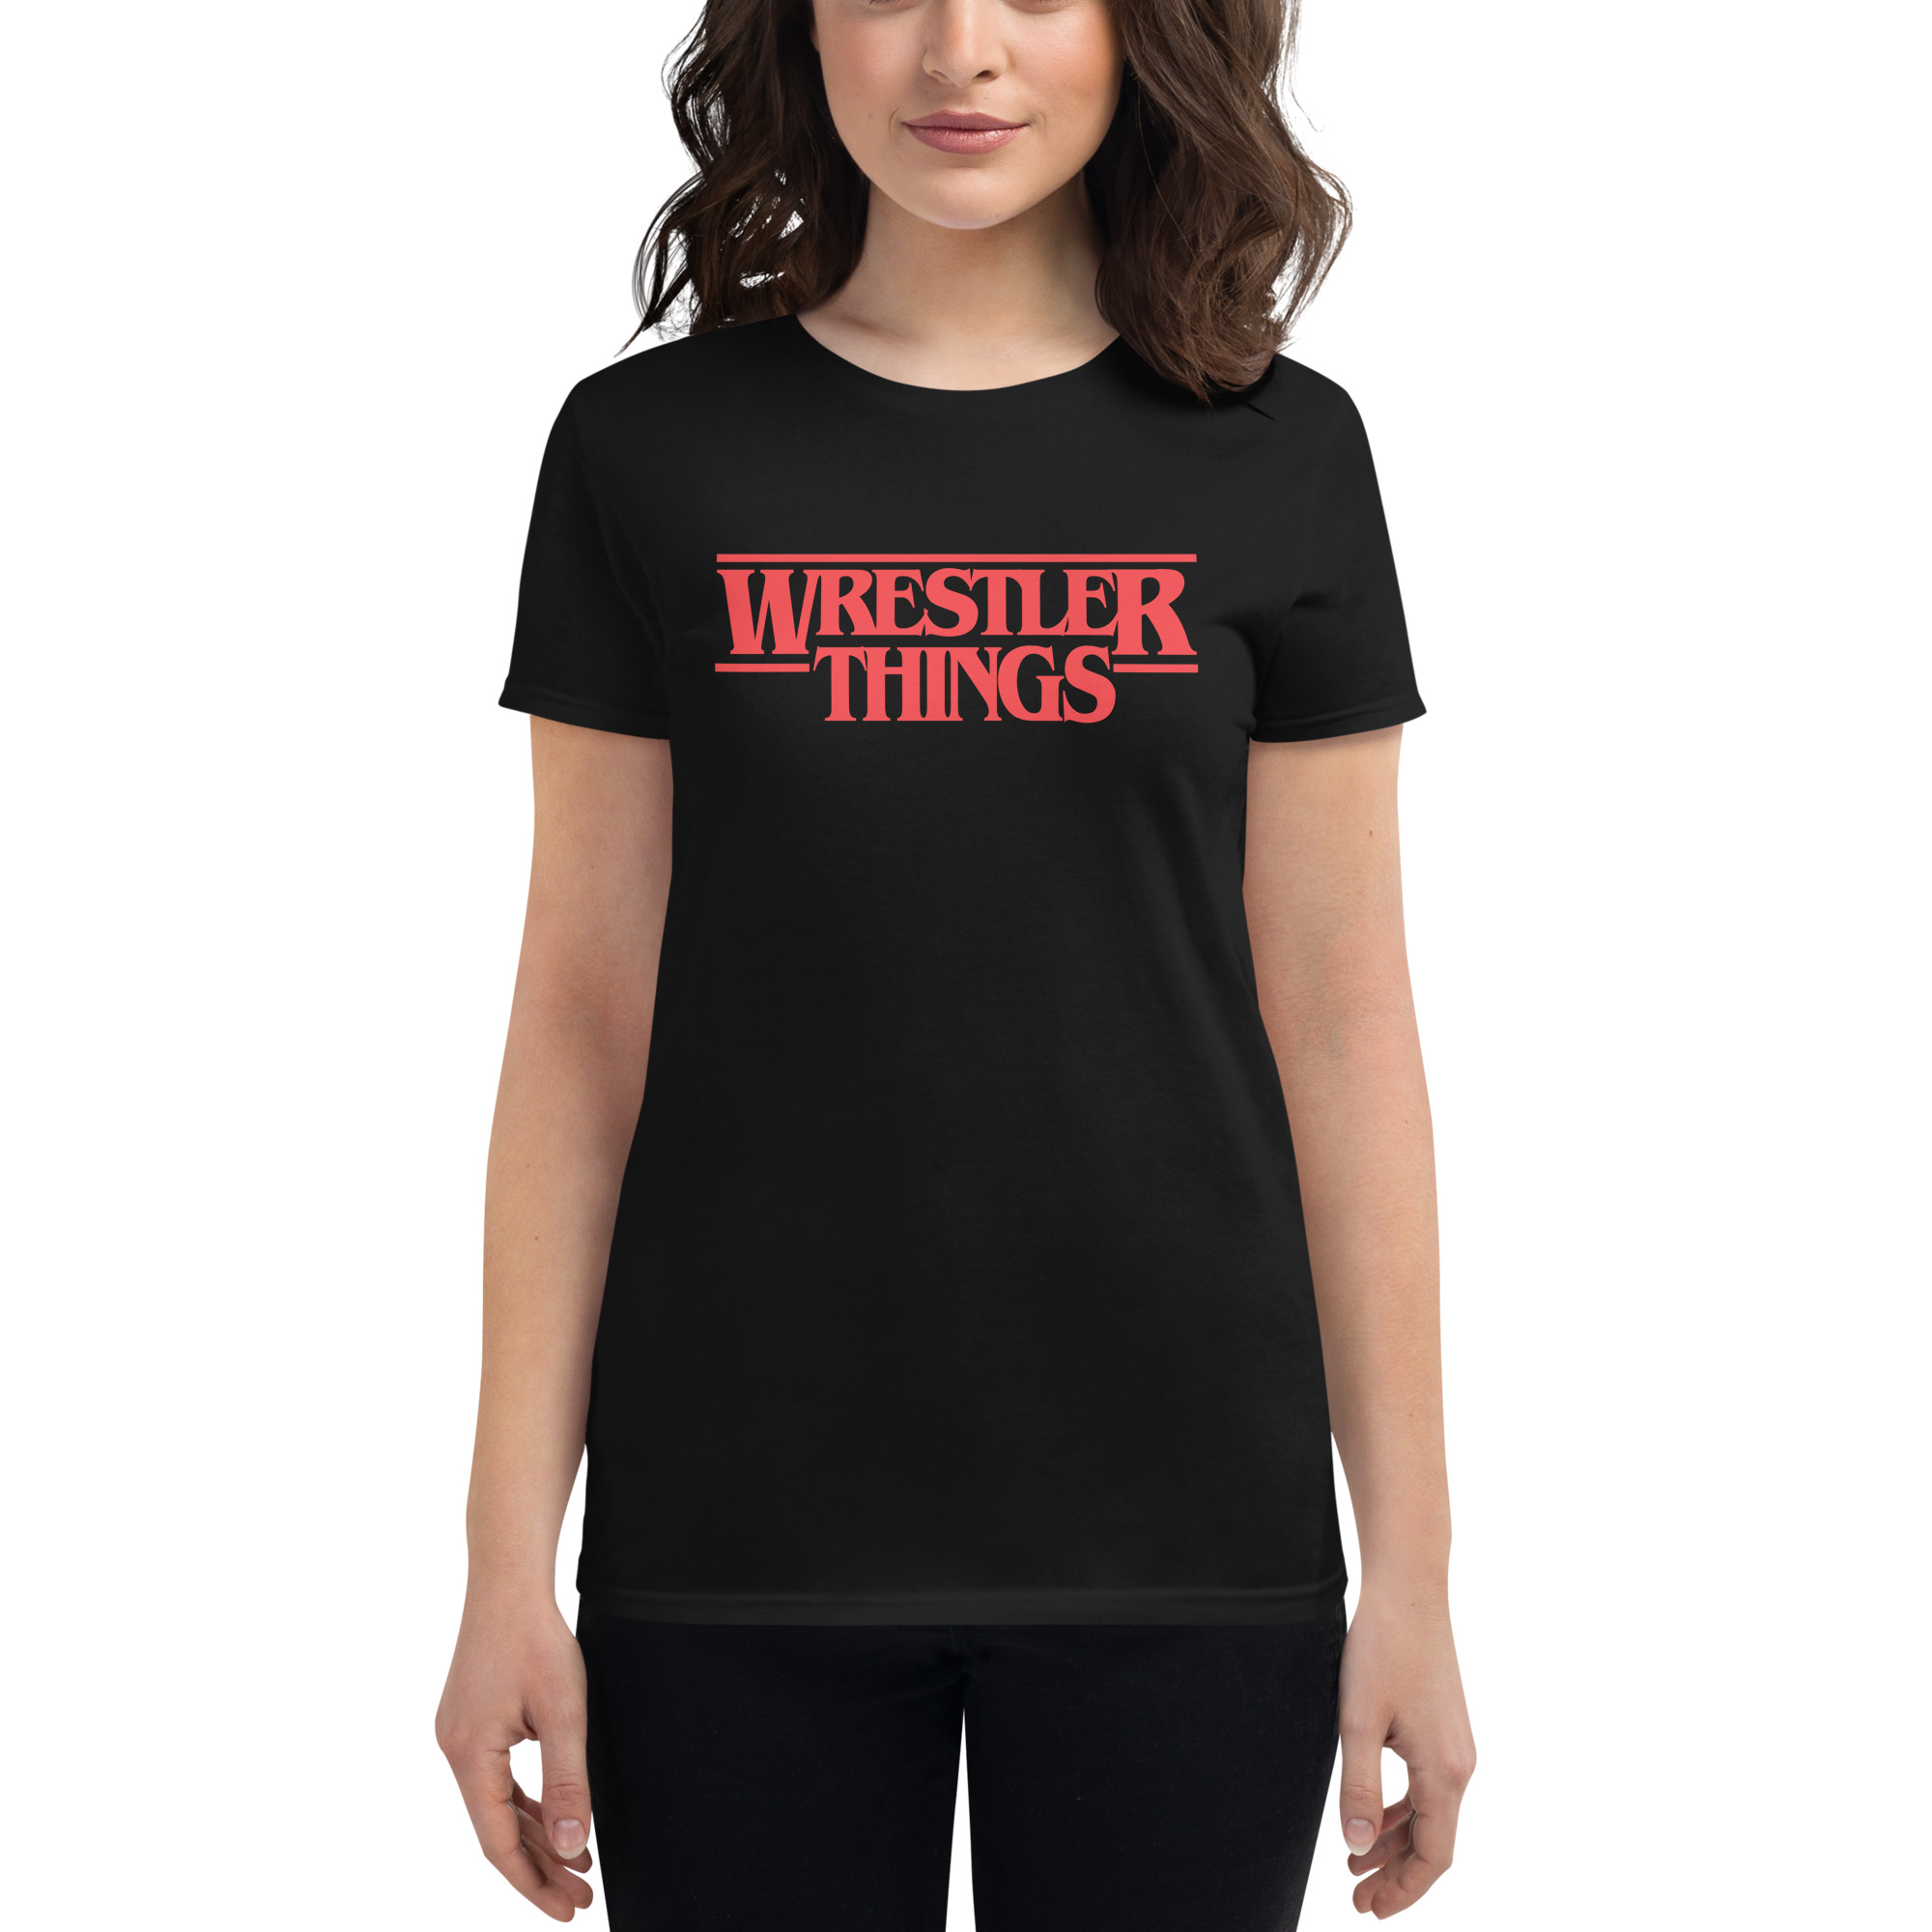 Wrestler Things Womens short sleeve t-shirt